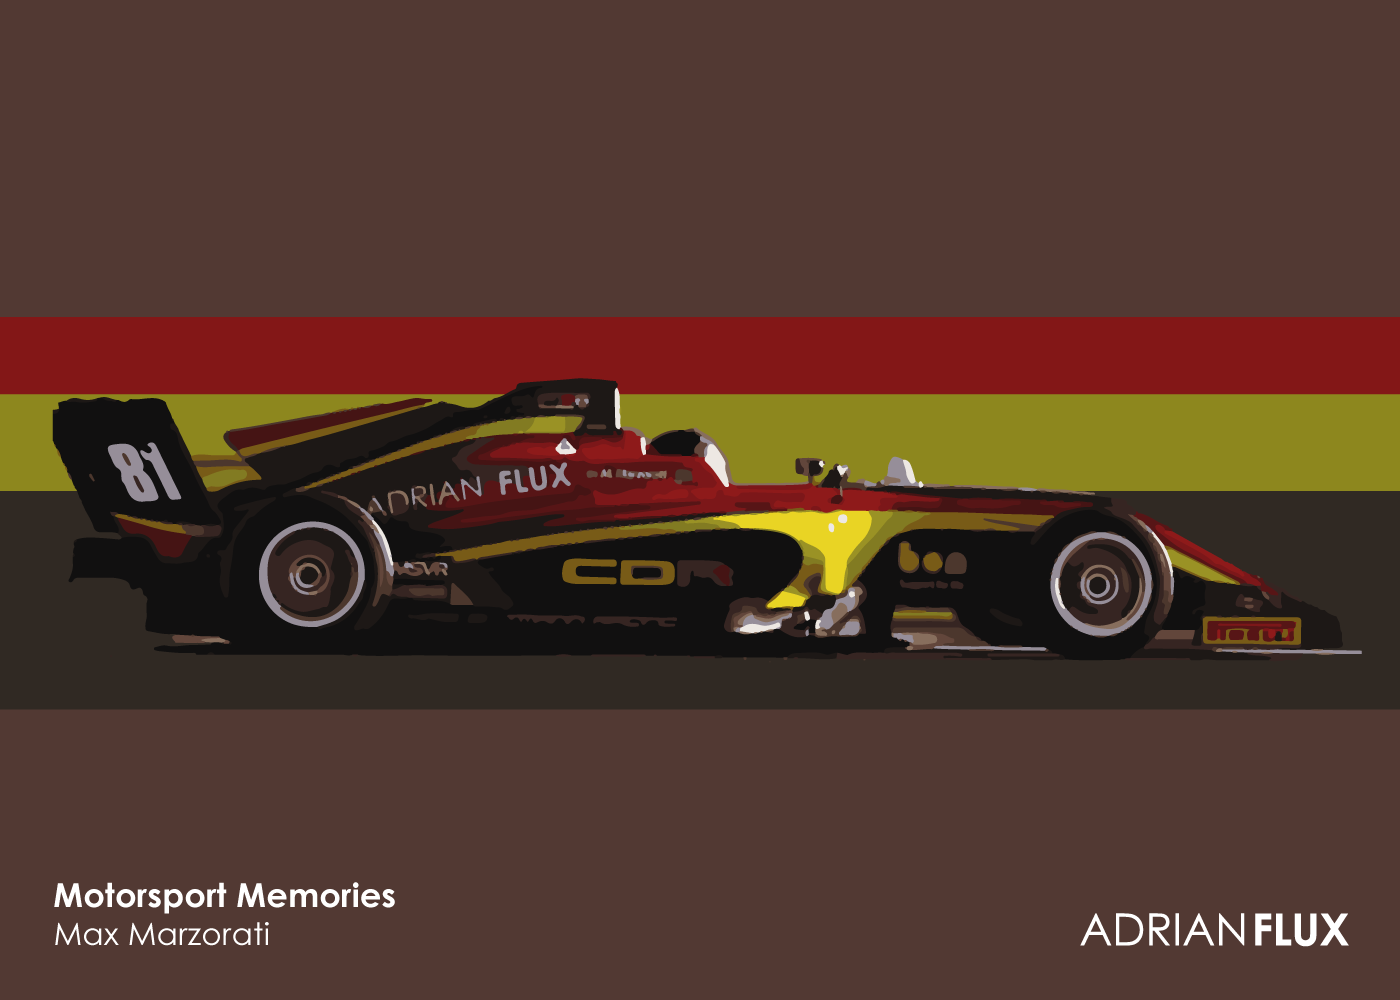 An illustration of Max Marzorati's F3 car